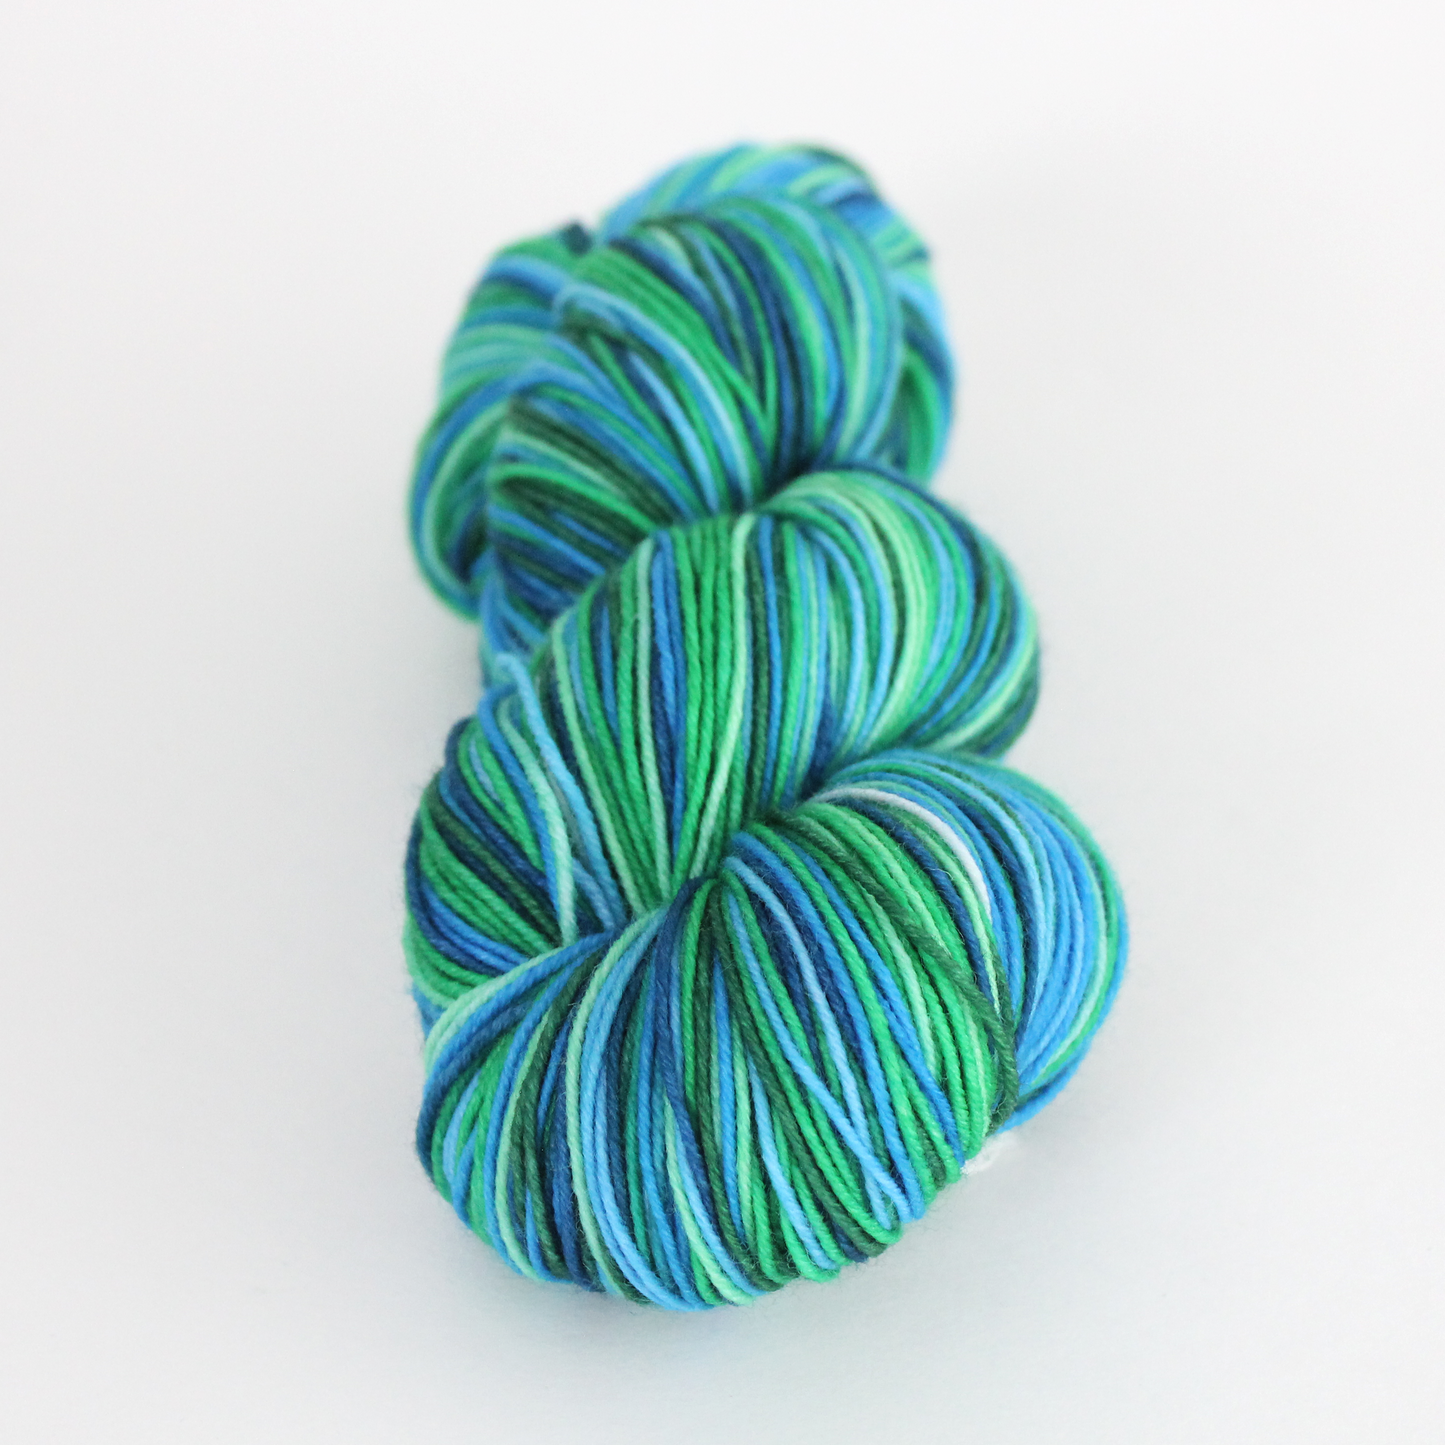 Sweet Baby James self-striping classic/sock yarn | Gauge